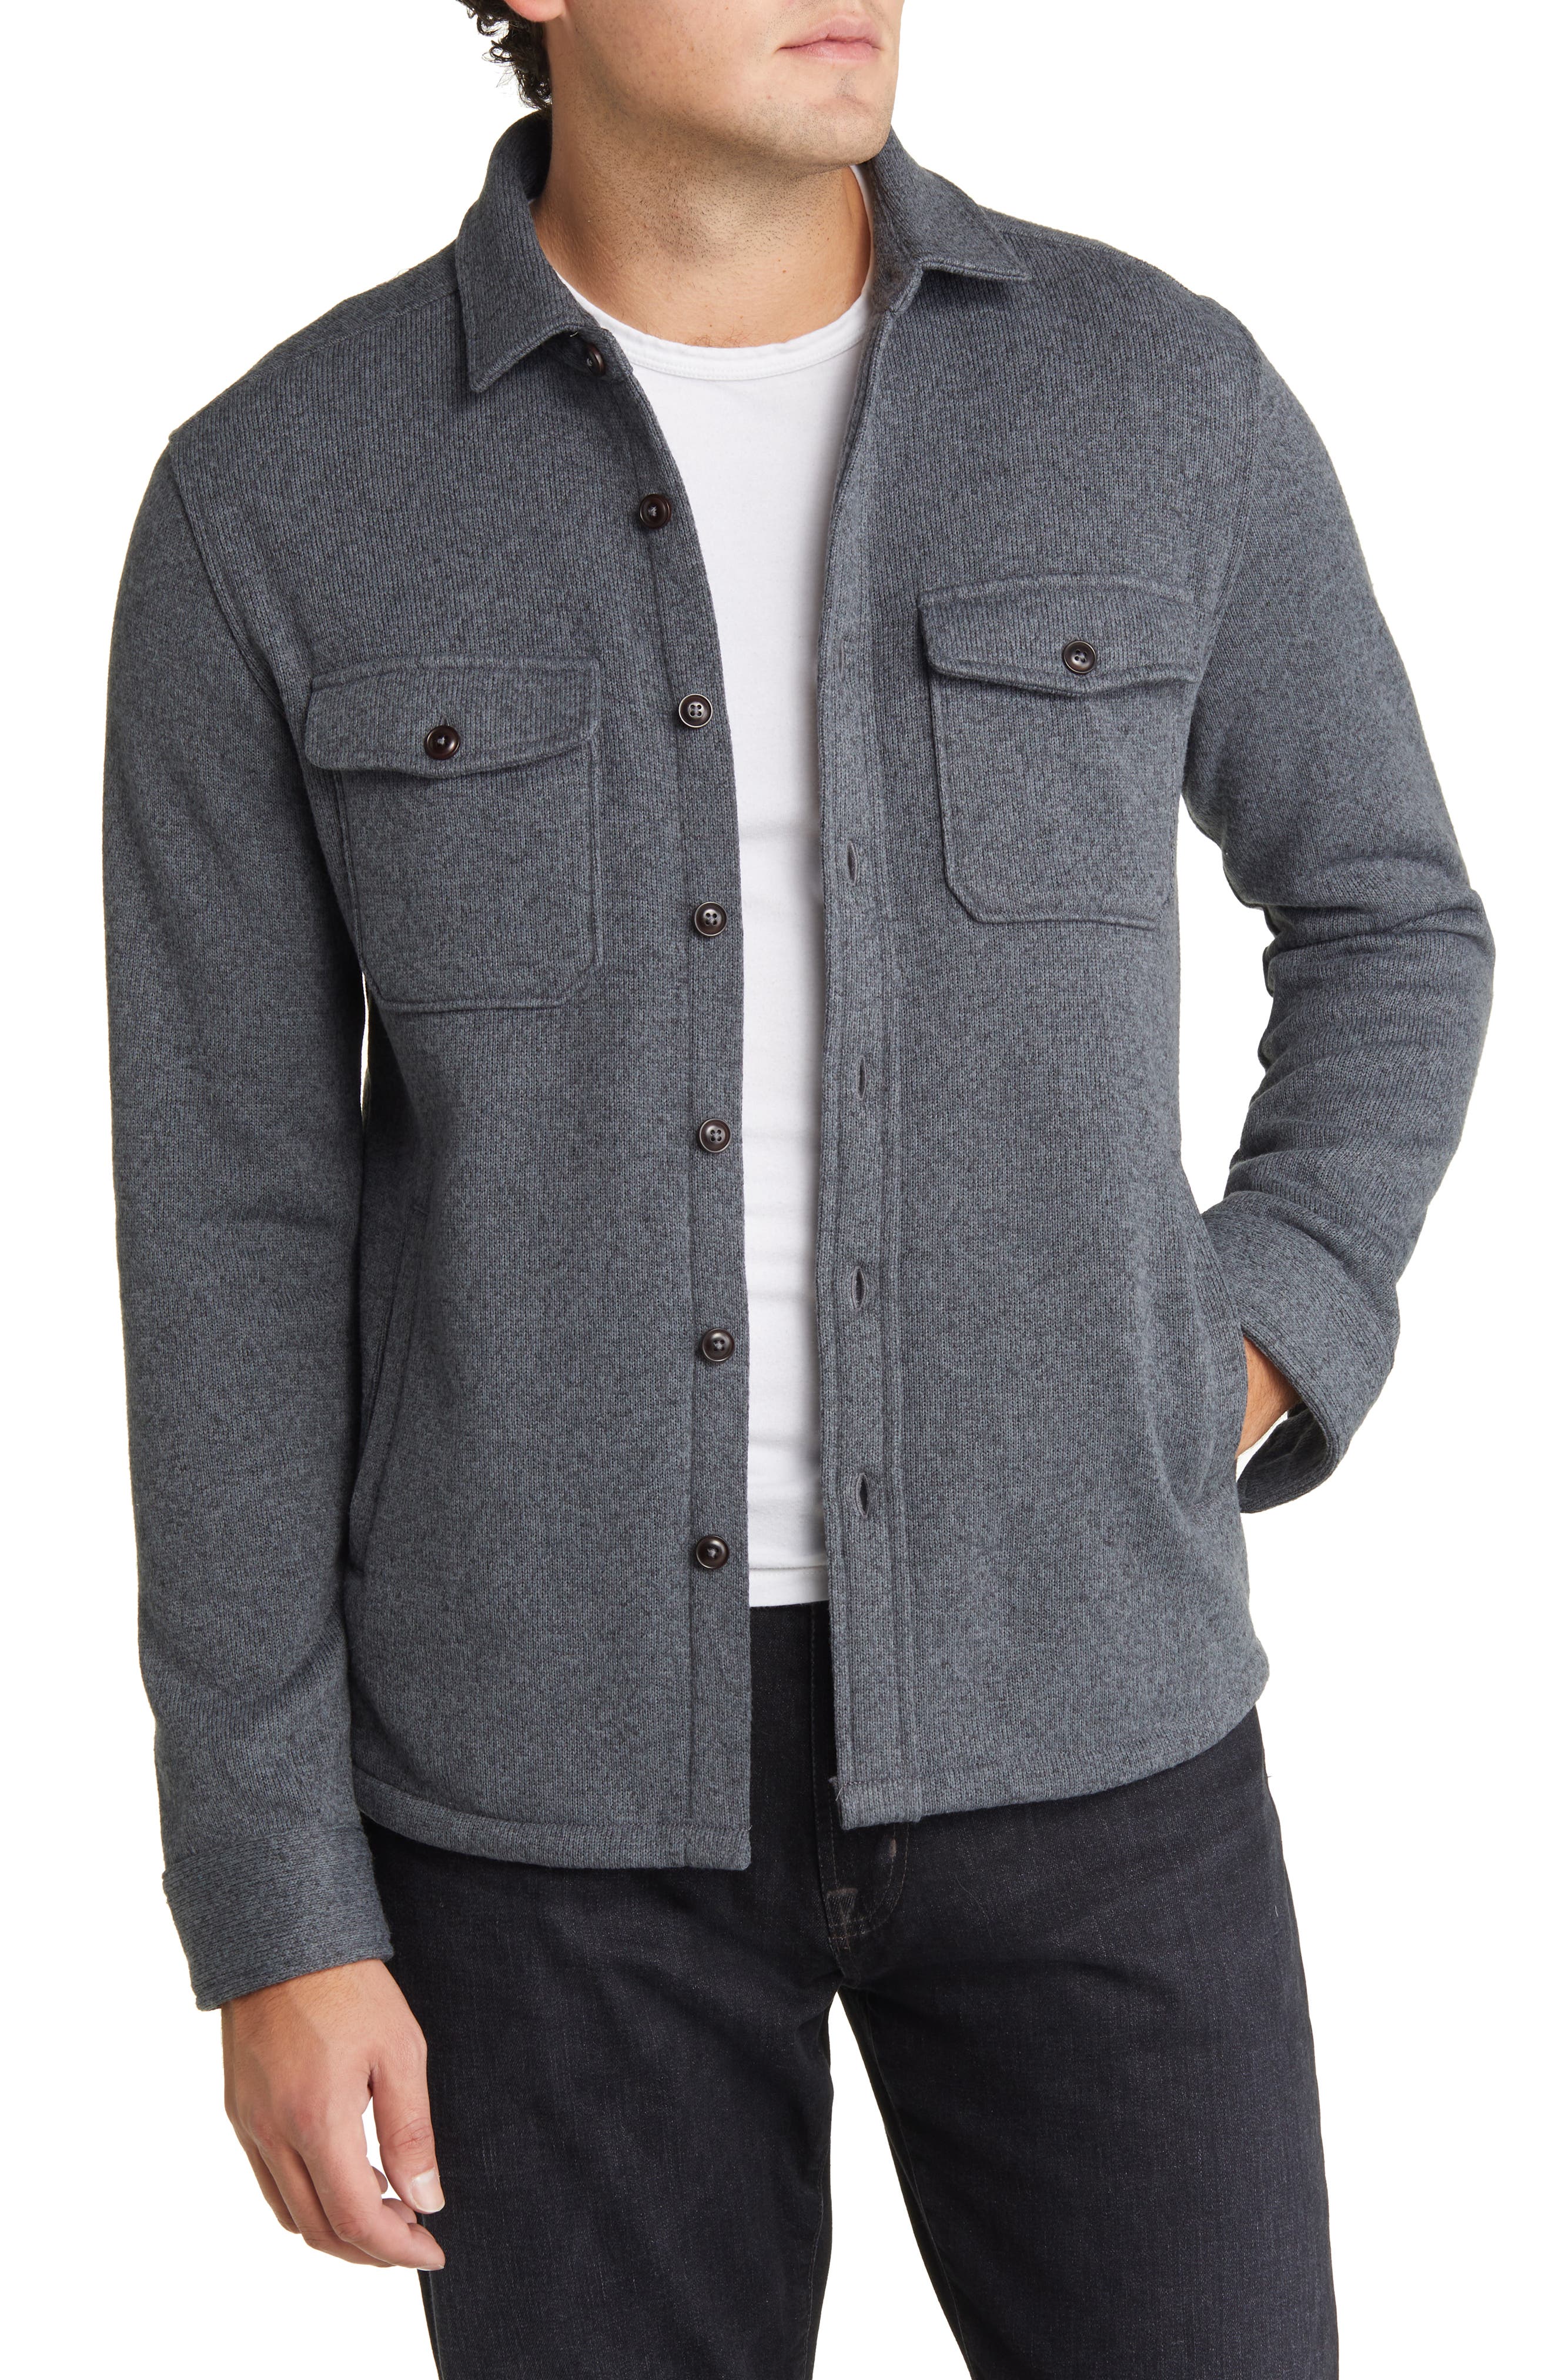 Nordstrom Men Clothing Shirts Casual Shirts Oversize Cotton Blend Shirt Jacket in Med H Grey at Nordstrom 